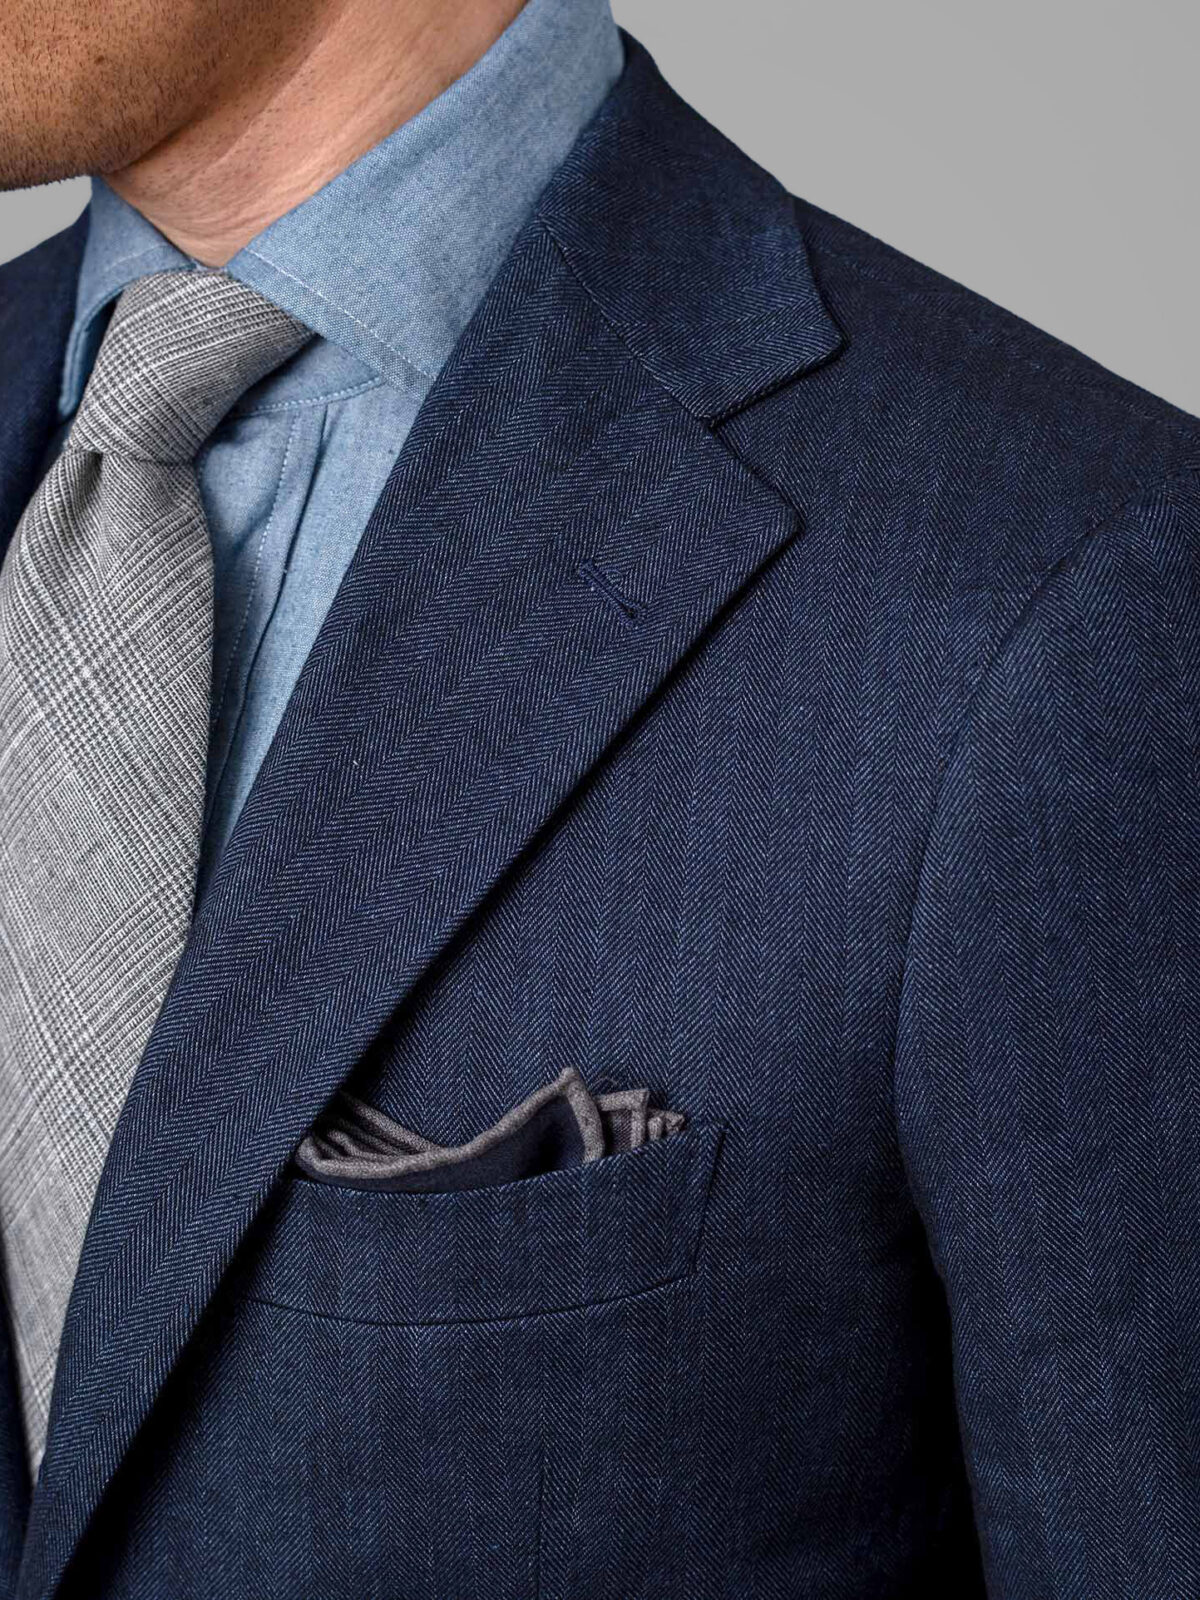 Irving Navy Heathered Herringbone Suit